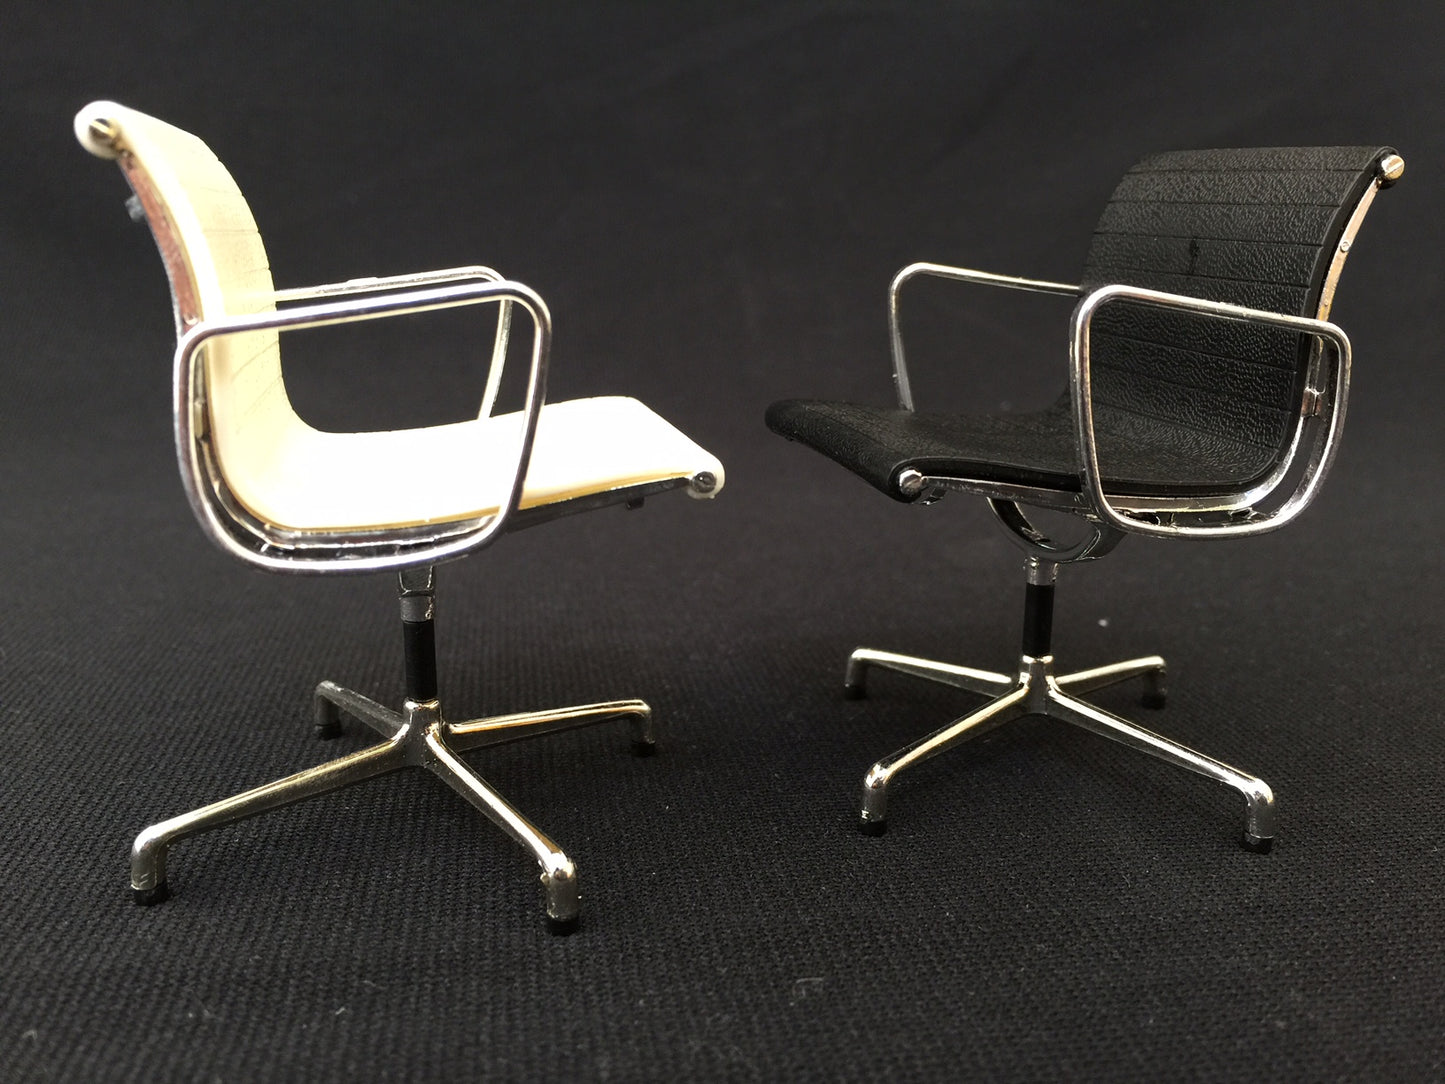 75147 Miniature Office Chair-BLACK-1